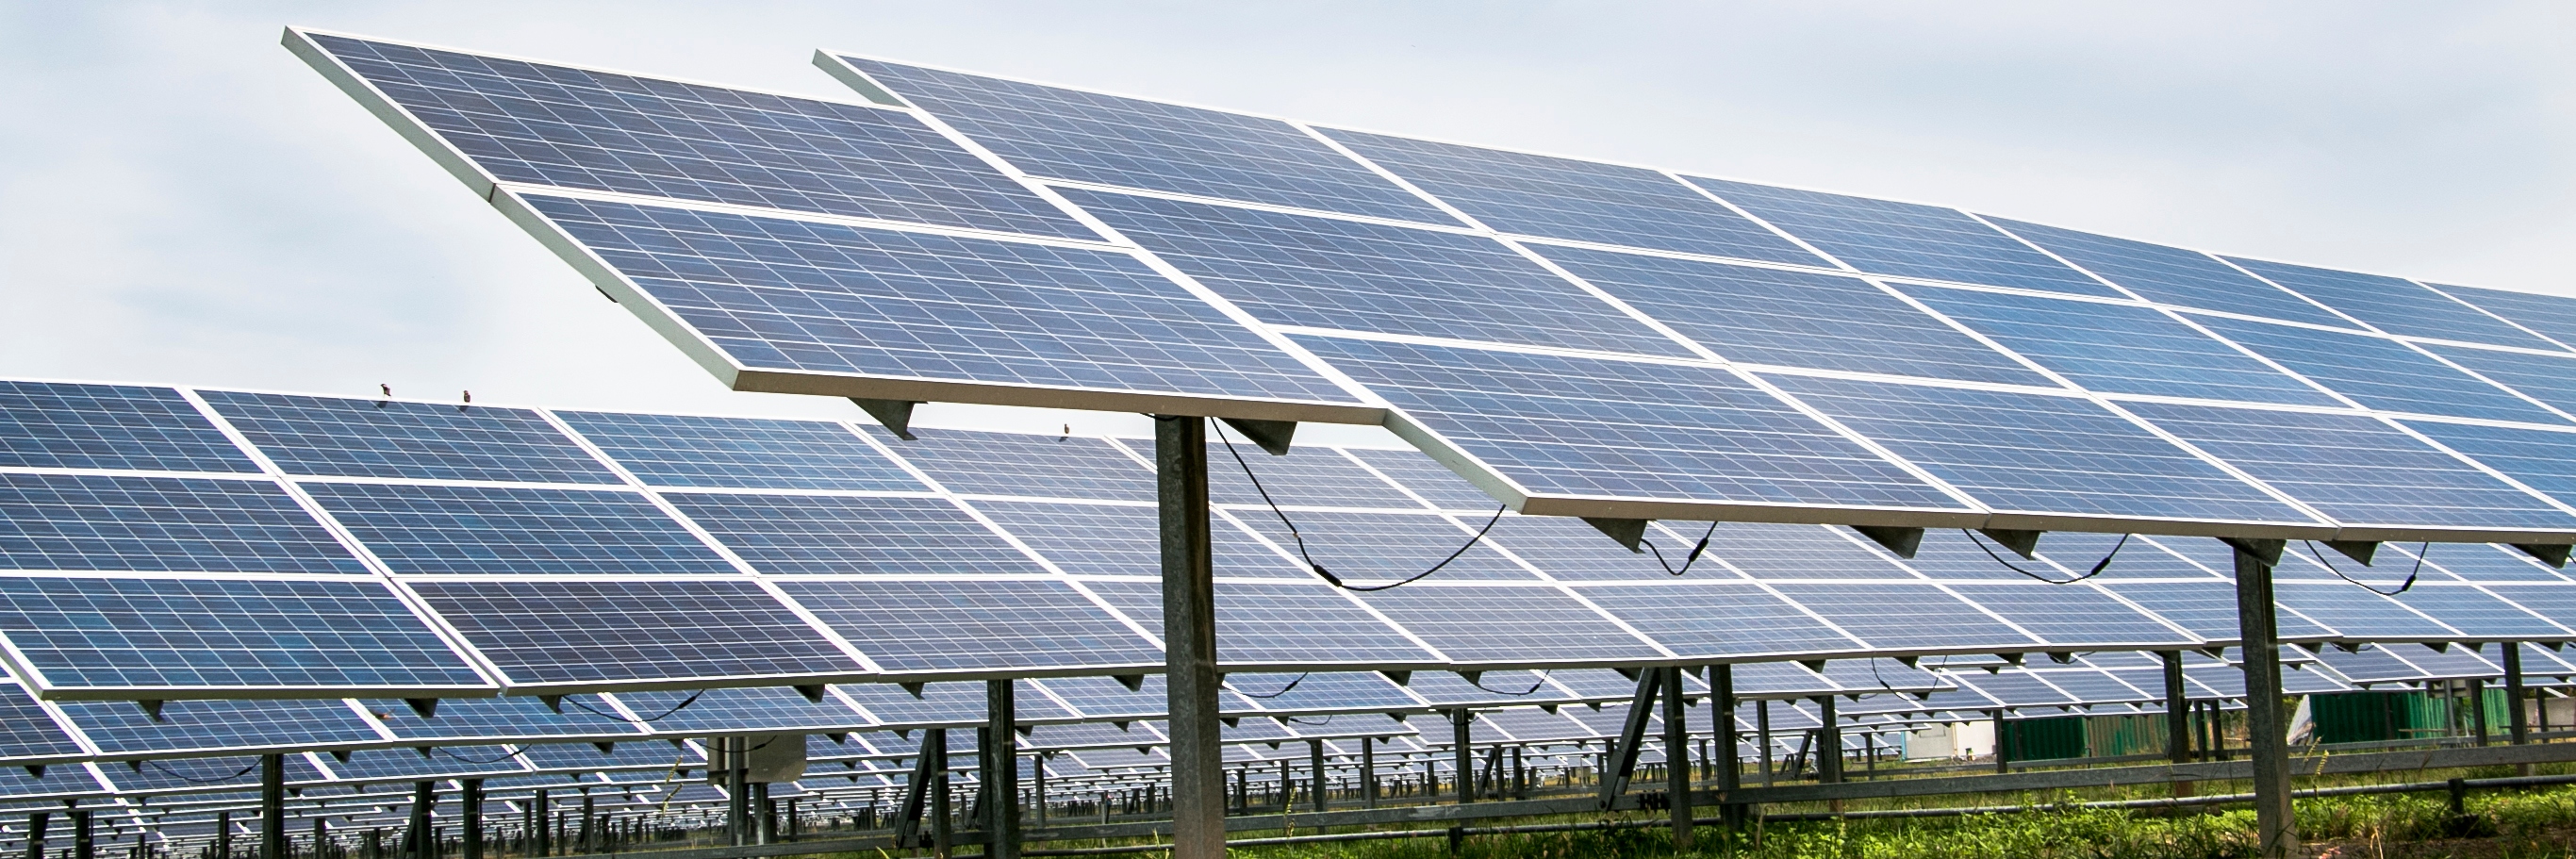 Solar cell panels farm